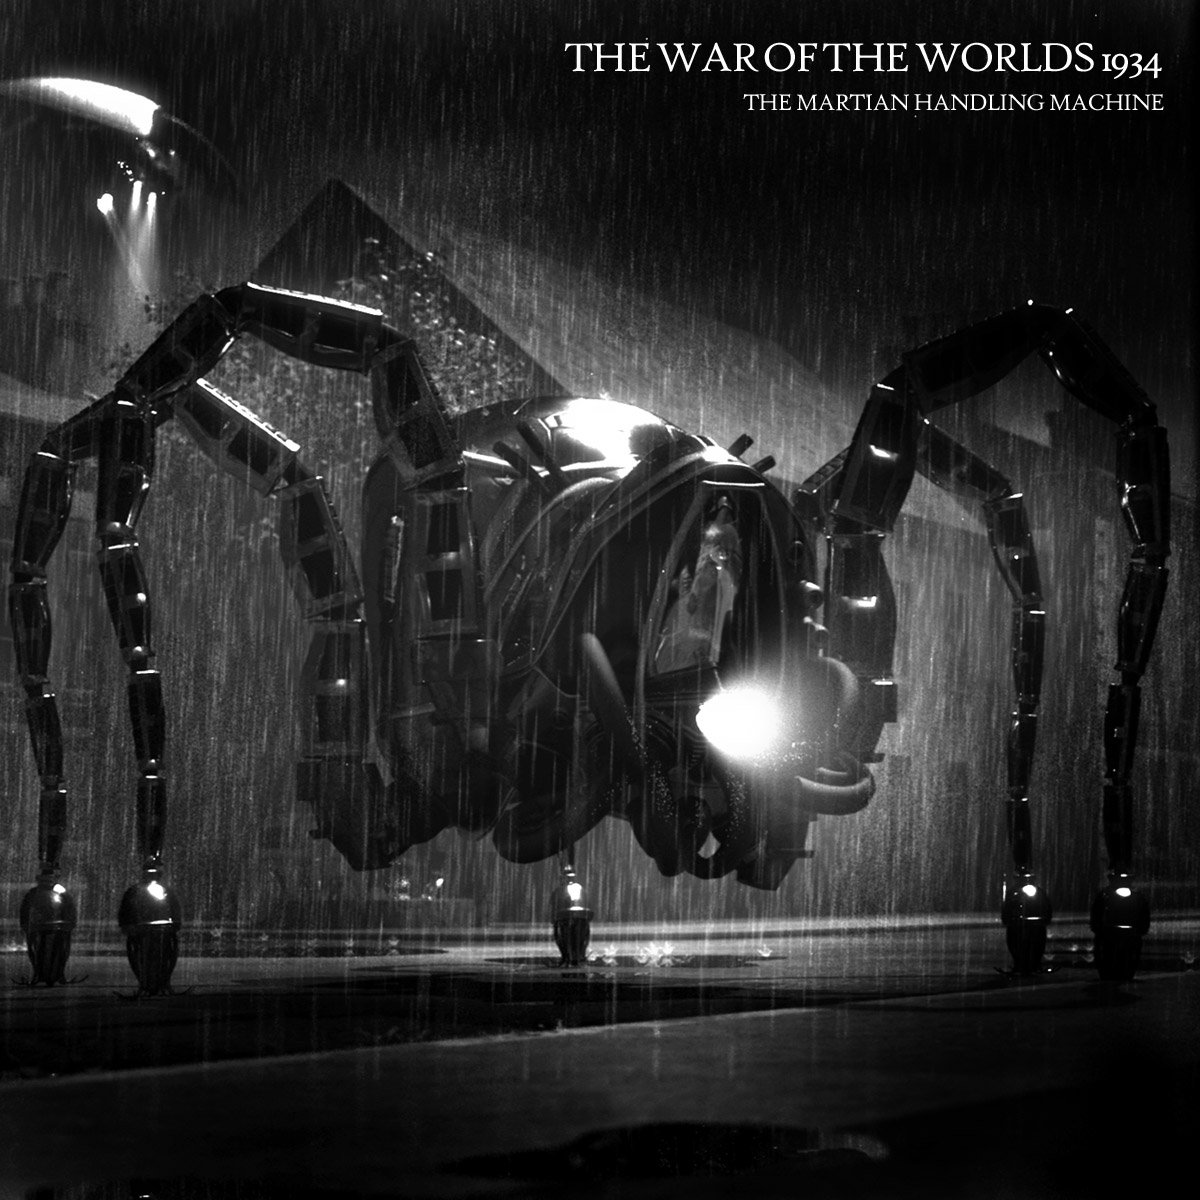 War of the Worlds 1934 - The Martian Handling Machine